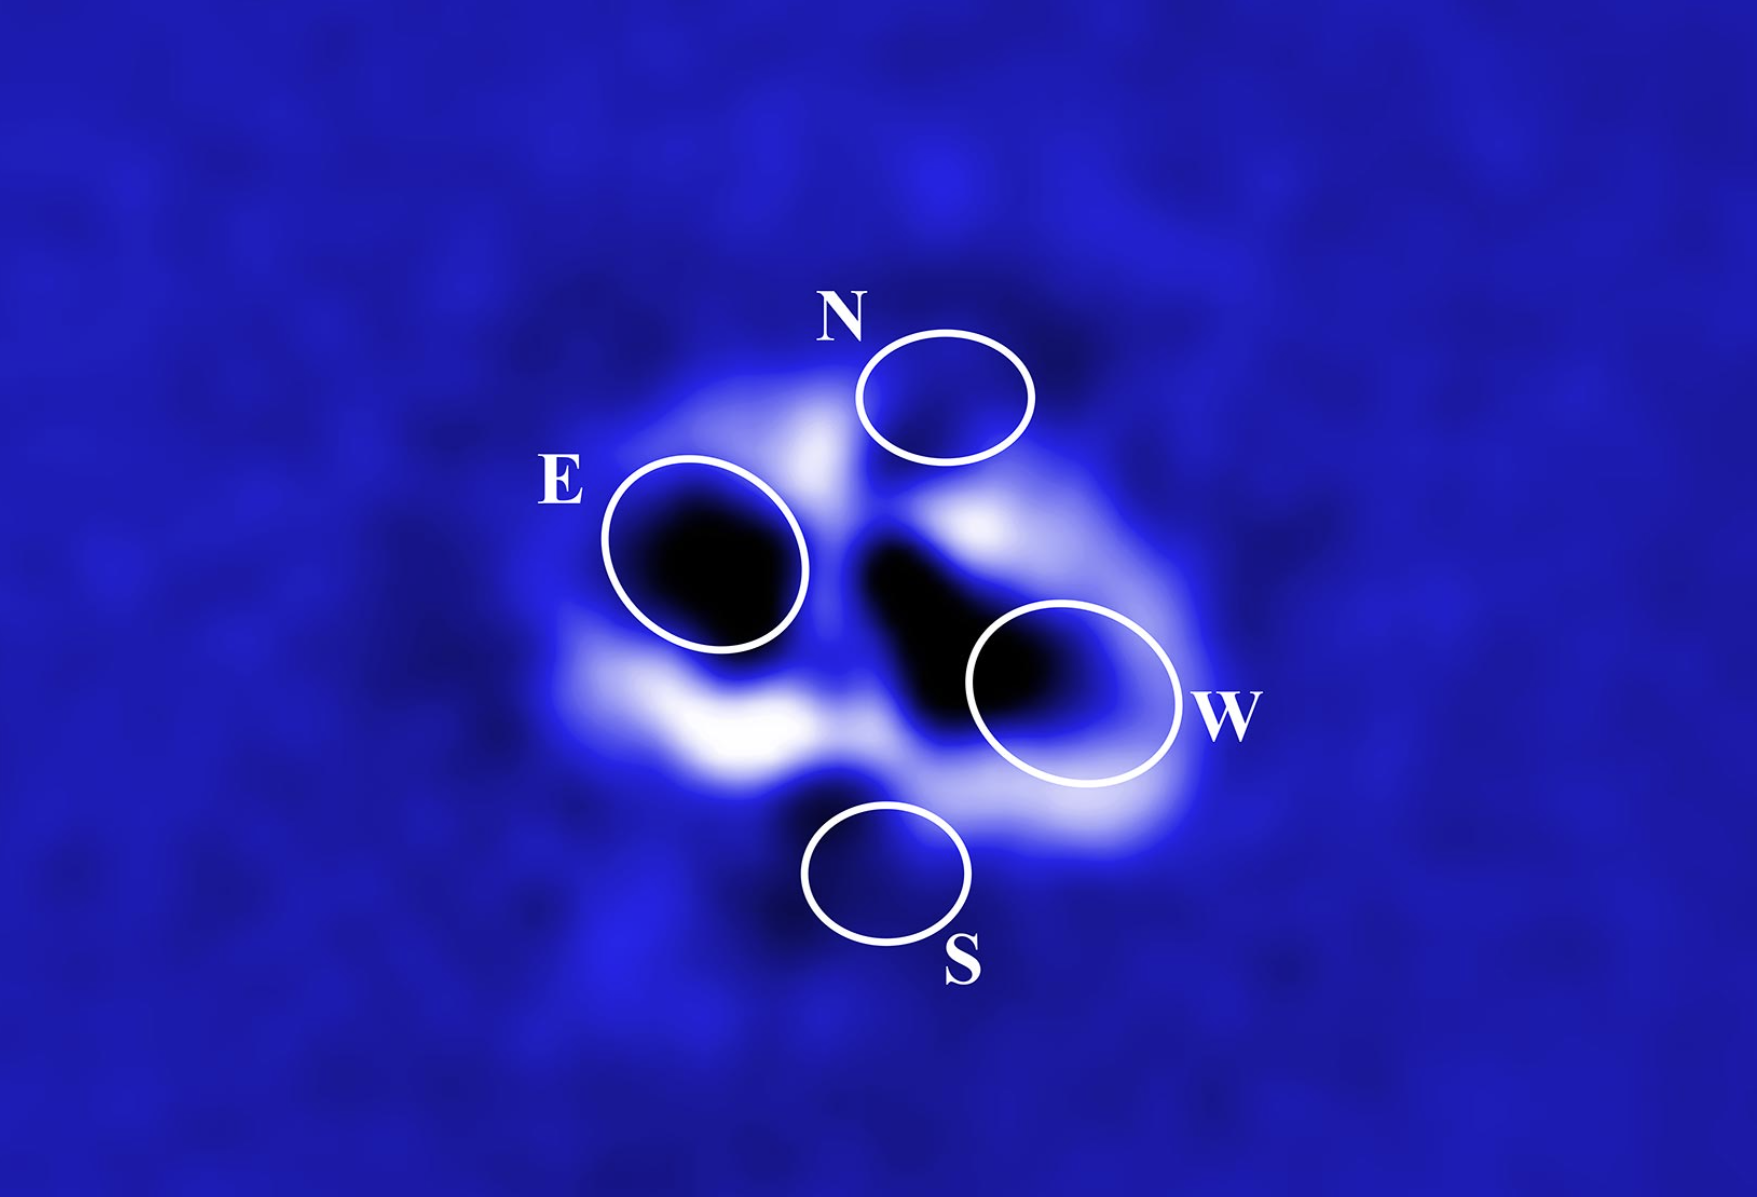 RBS 797星系团中心发现巨型黑洞引起的四个巨大空洞或气泡